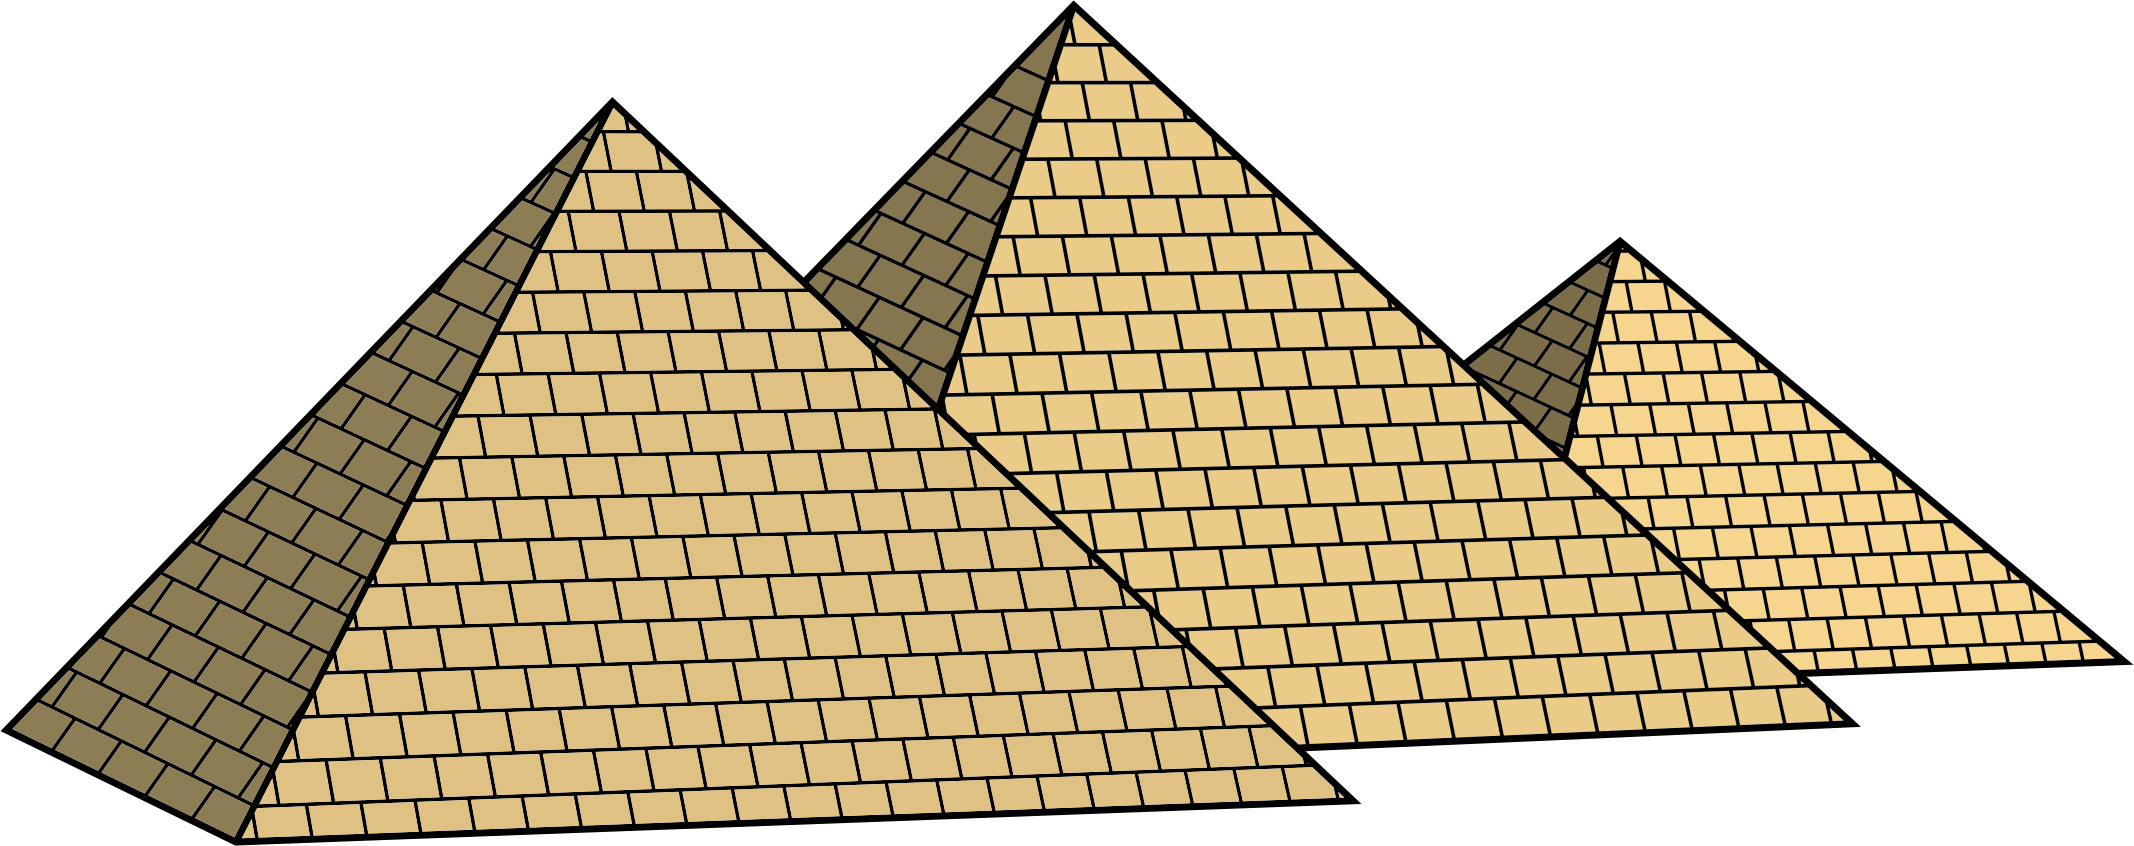 Pyramids clipart clipart.